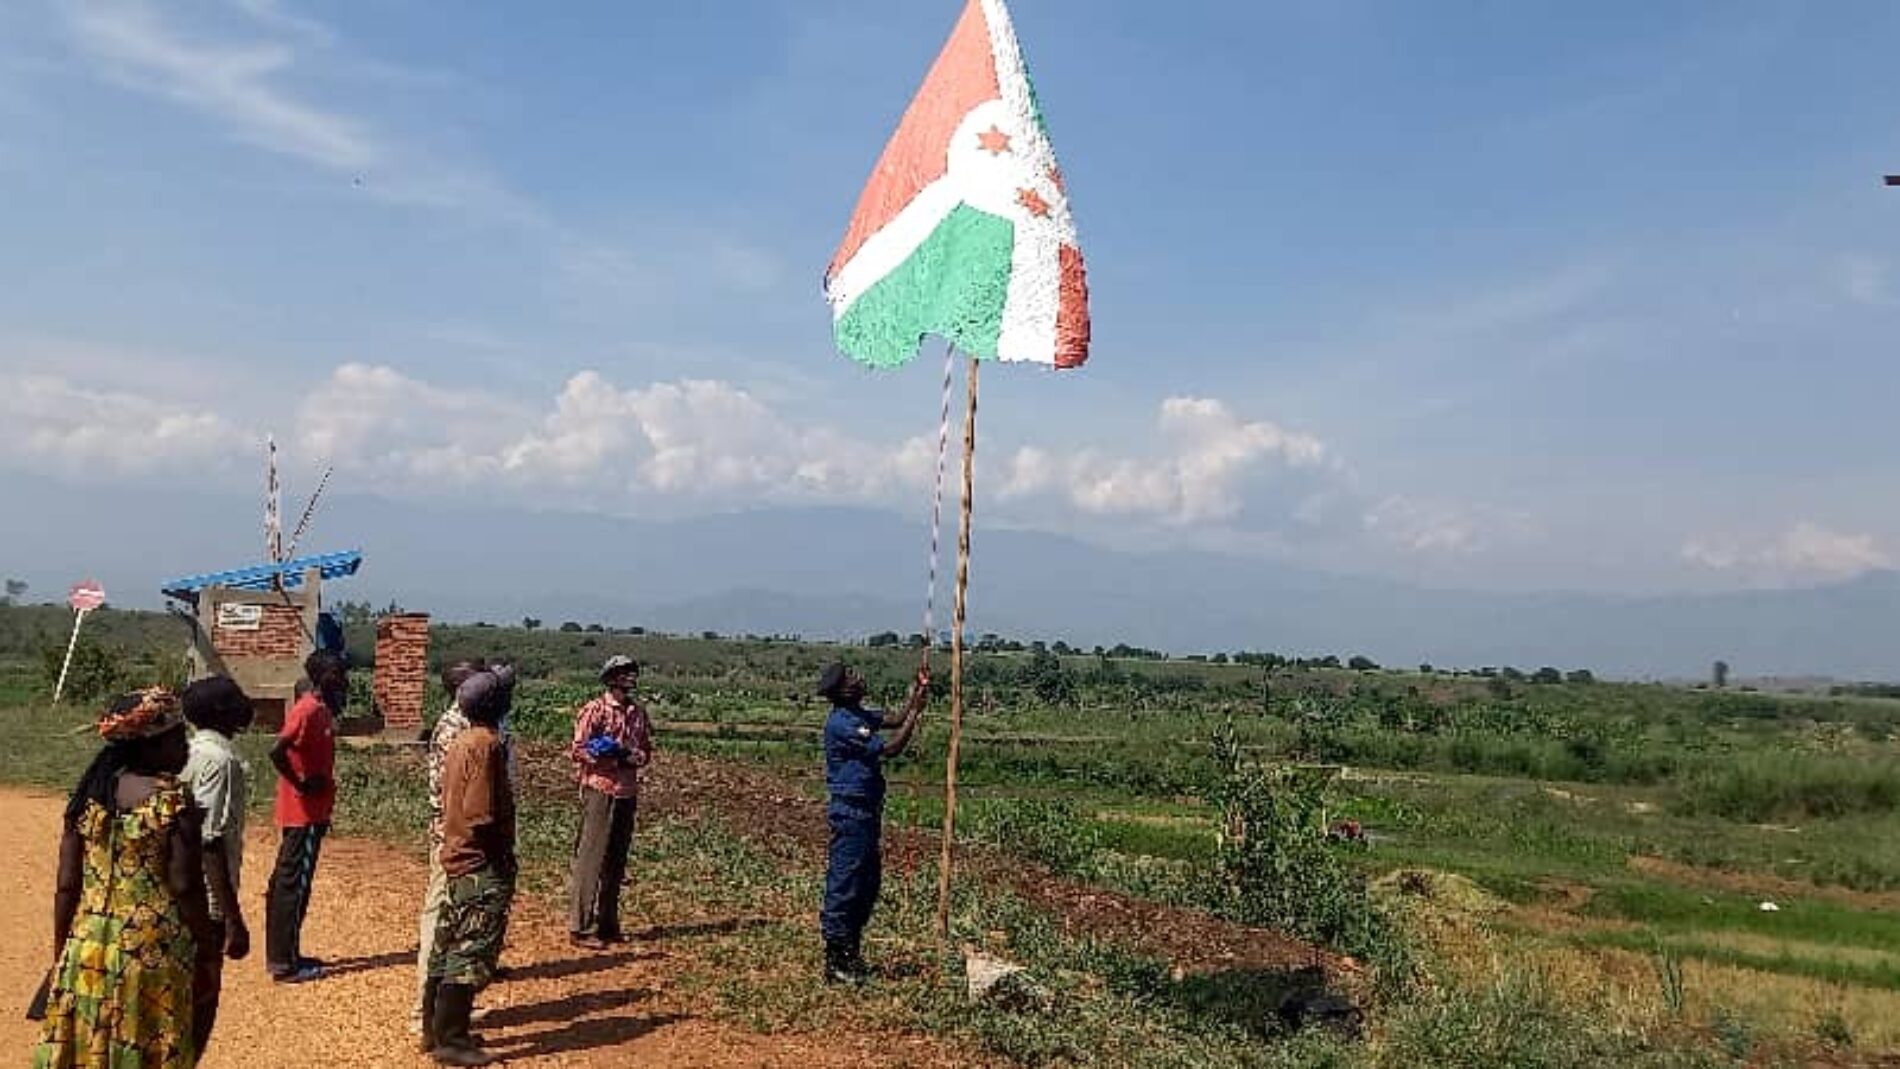 Rugombo-Luvungi: official opening of the Burundian-Congolese border